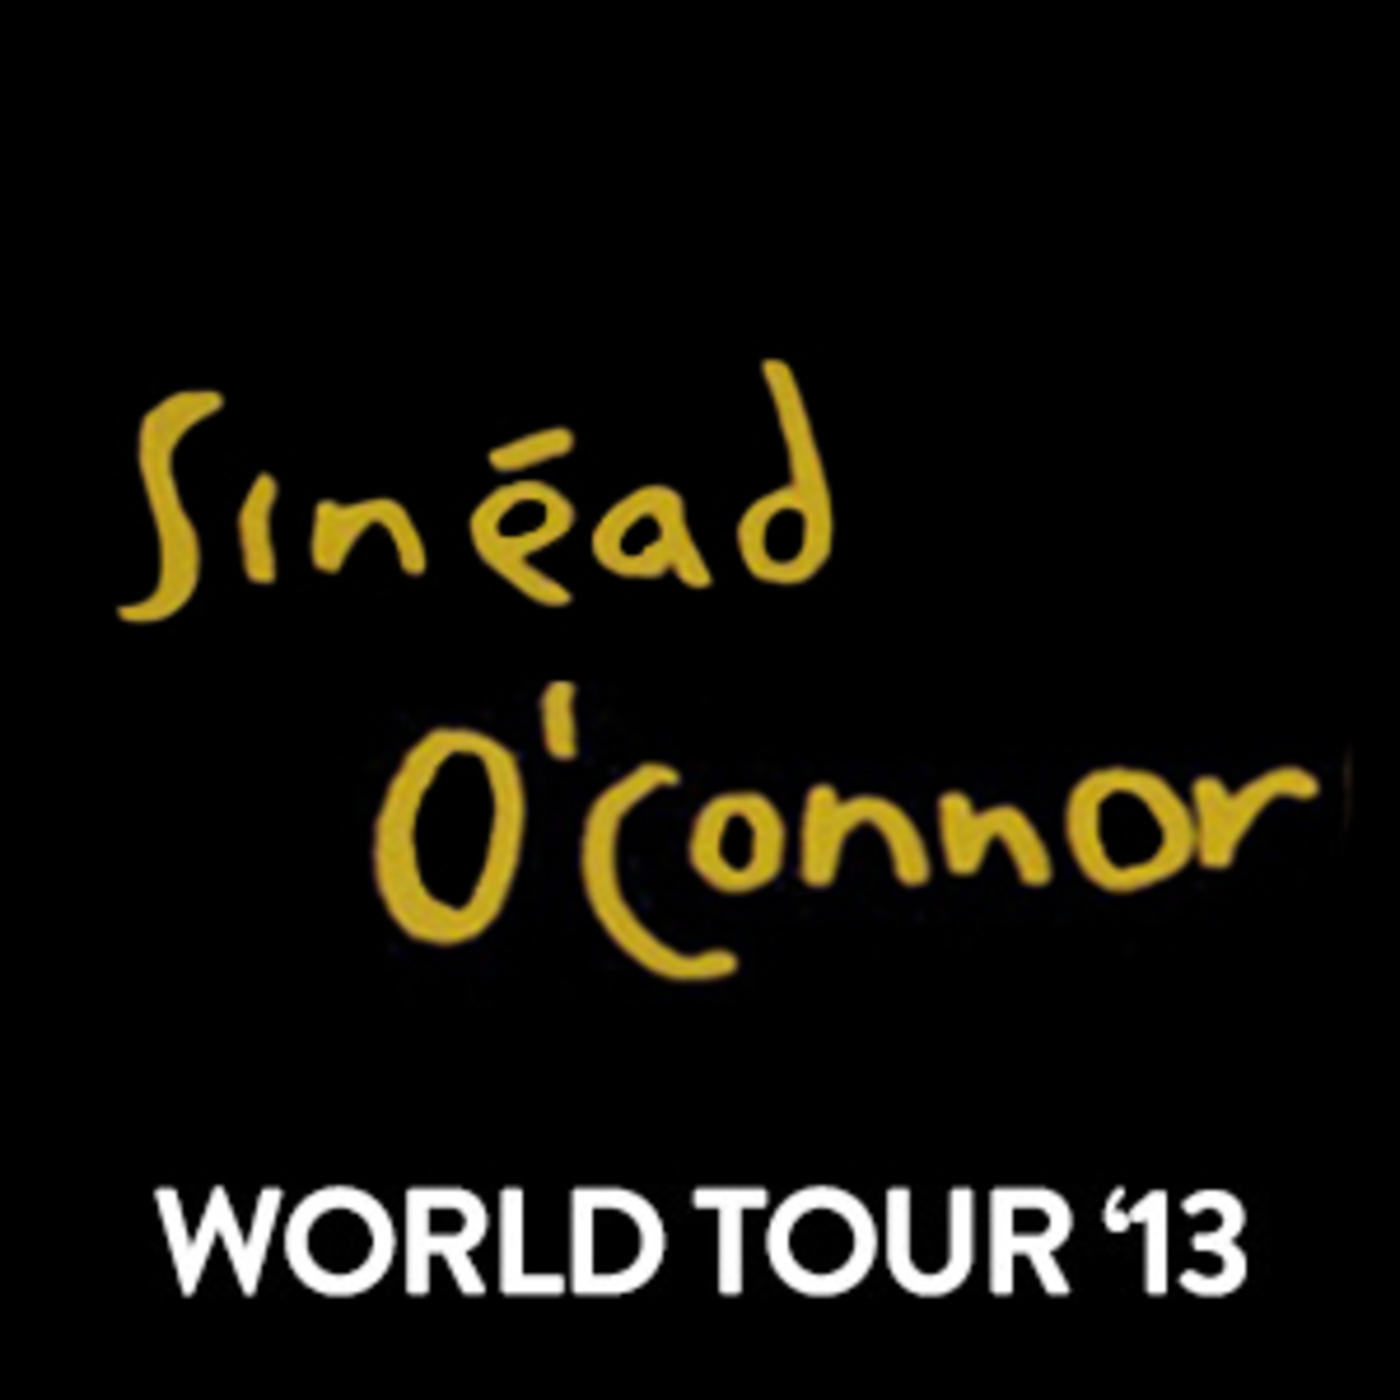 Sinéad O'Connor - World Tour '13